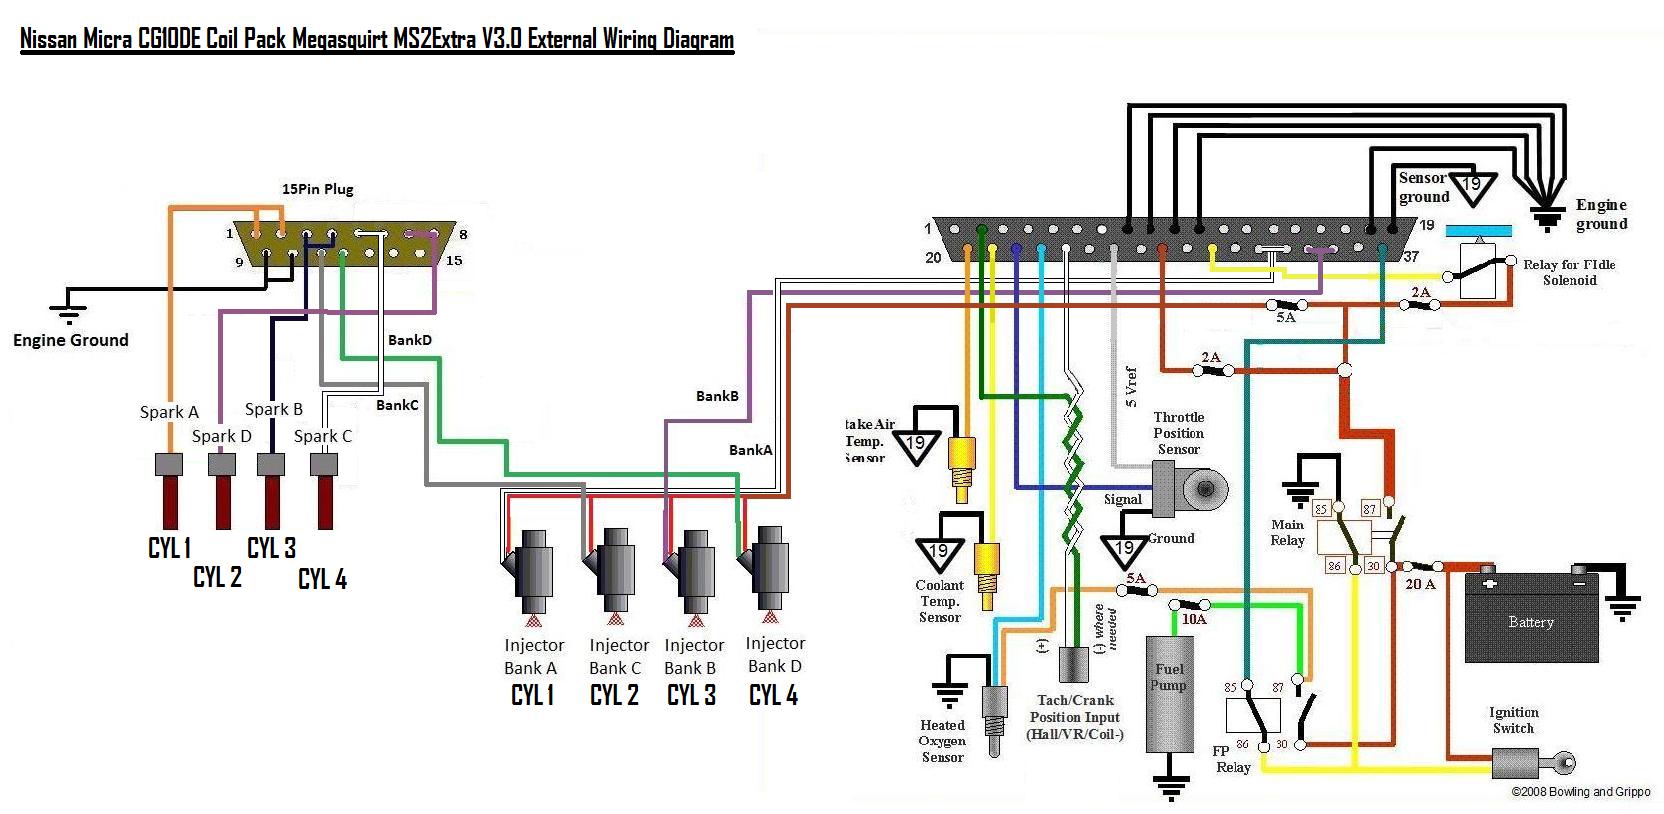 Nissan micra k11 radio wiring diagram #4